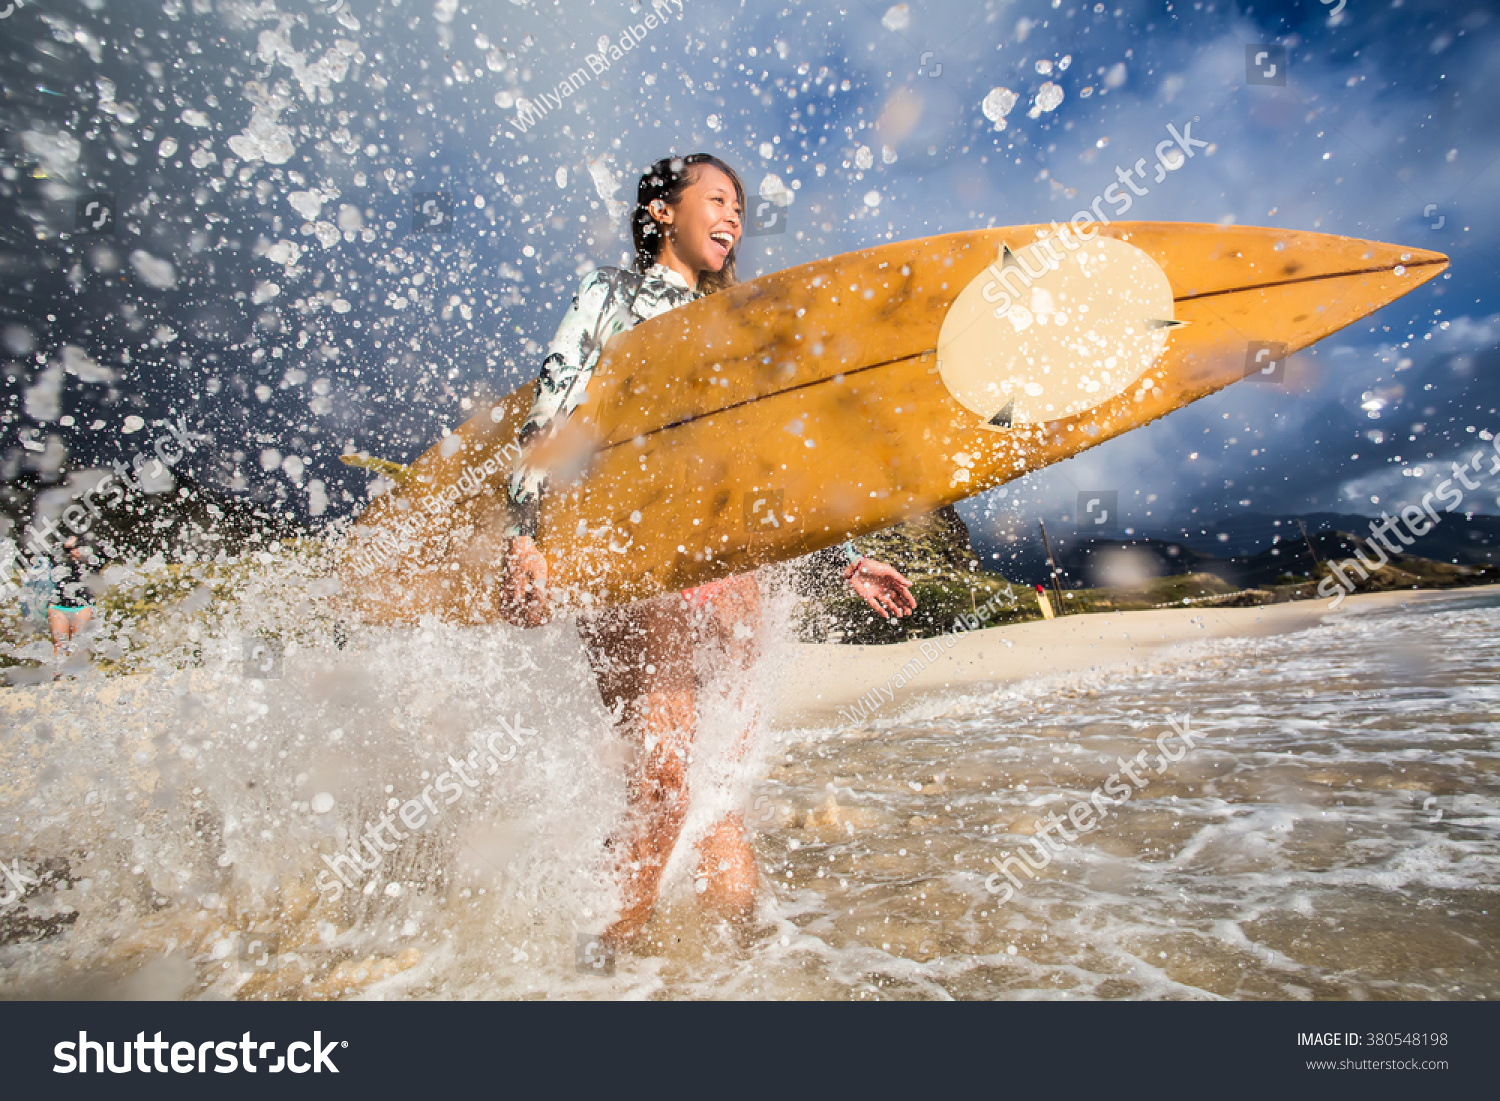 Surfing Girl On Beach Ready Go Stock Photo Edit Now 380548198